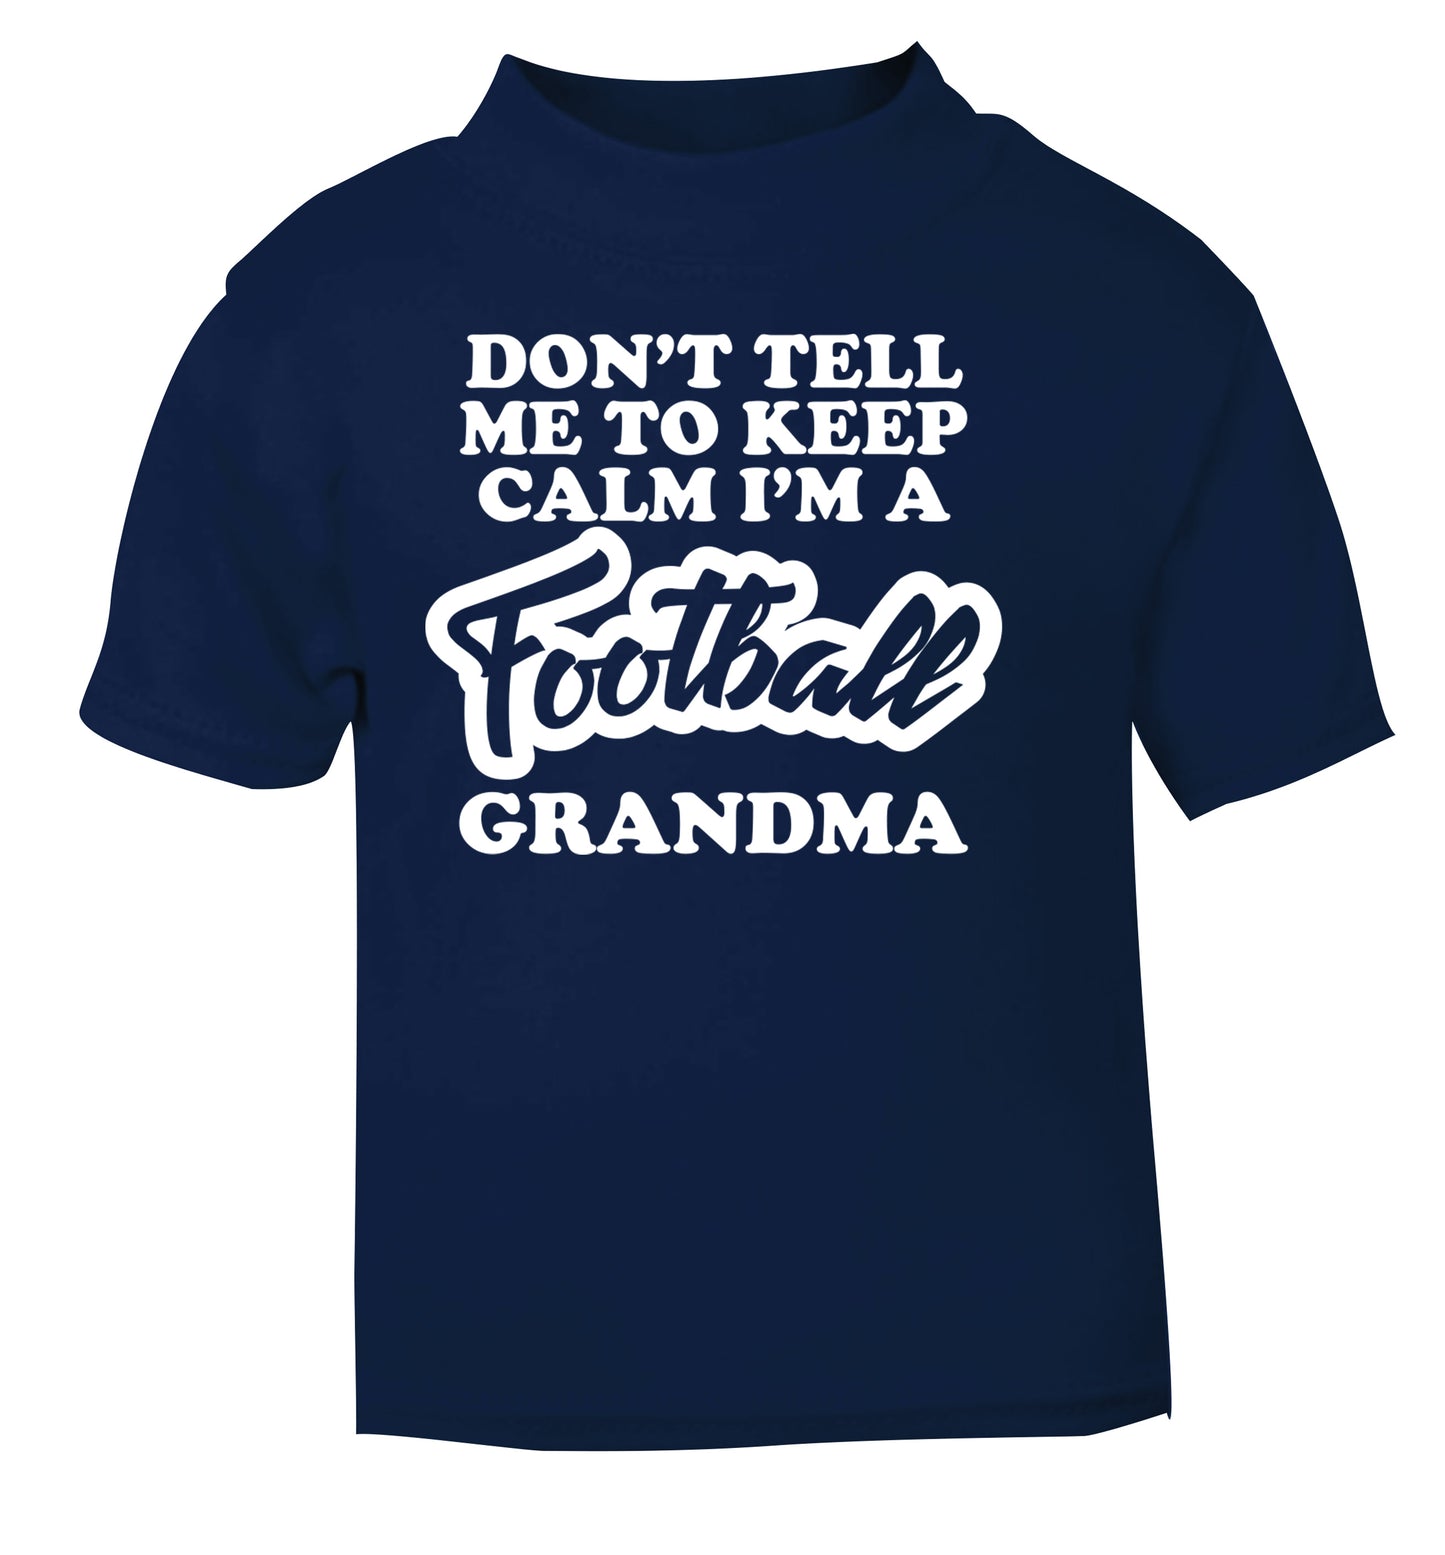 Don't tell me to keep calm I'm a football grandma navy Baby Toddler Tshirt 2 Years